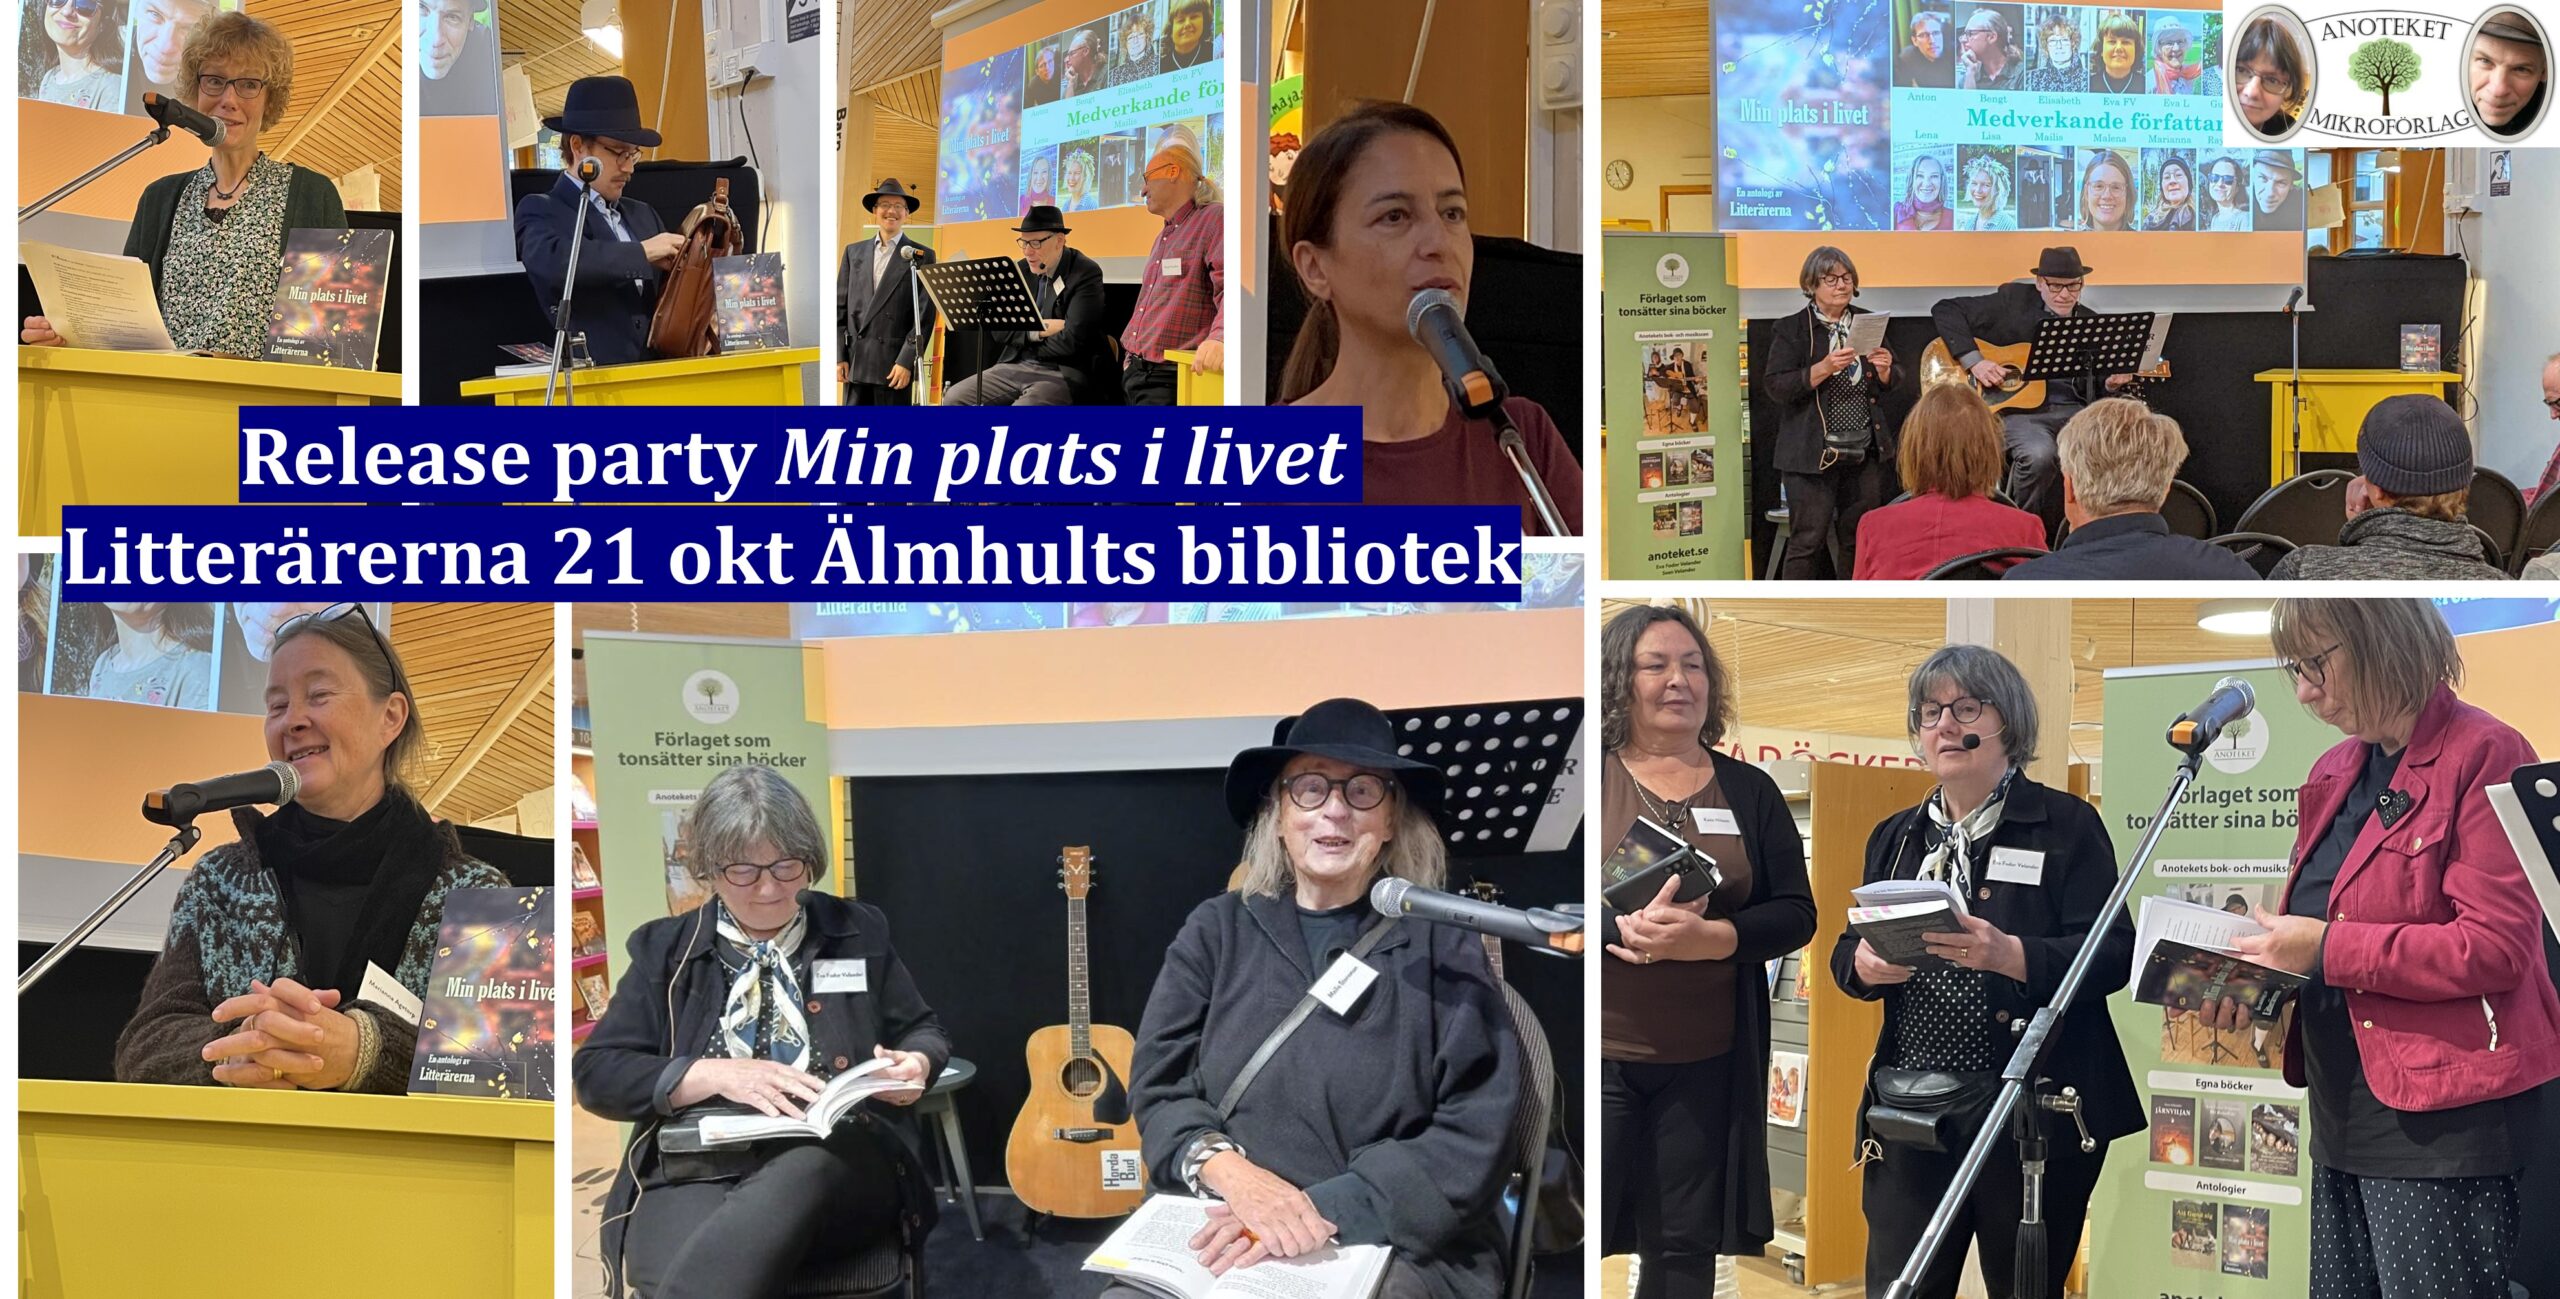 Release party ”Min plats i livet” 21 okt Älmhults bibliotek